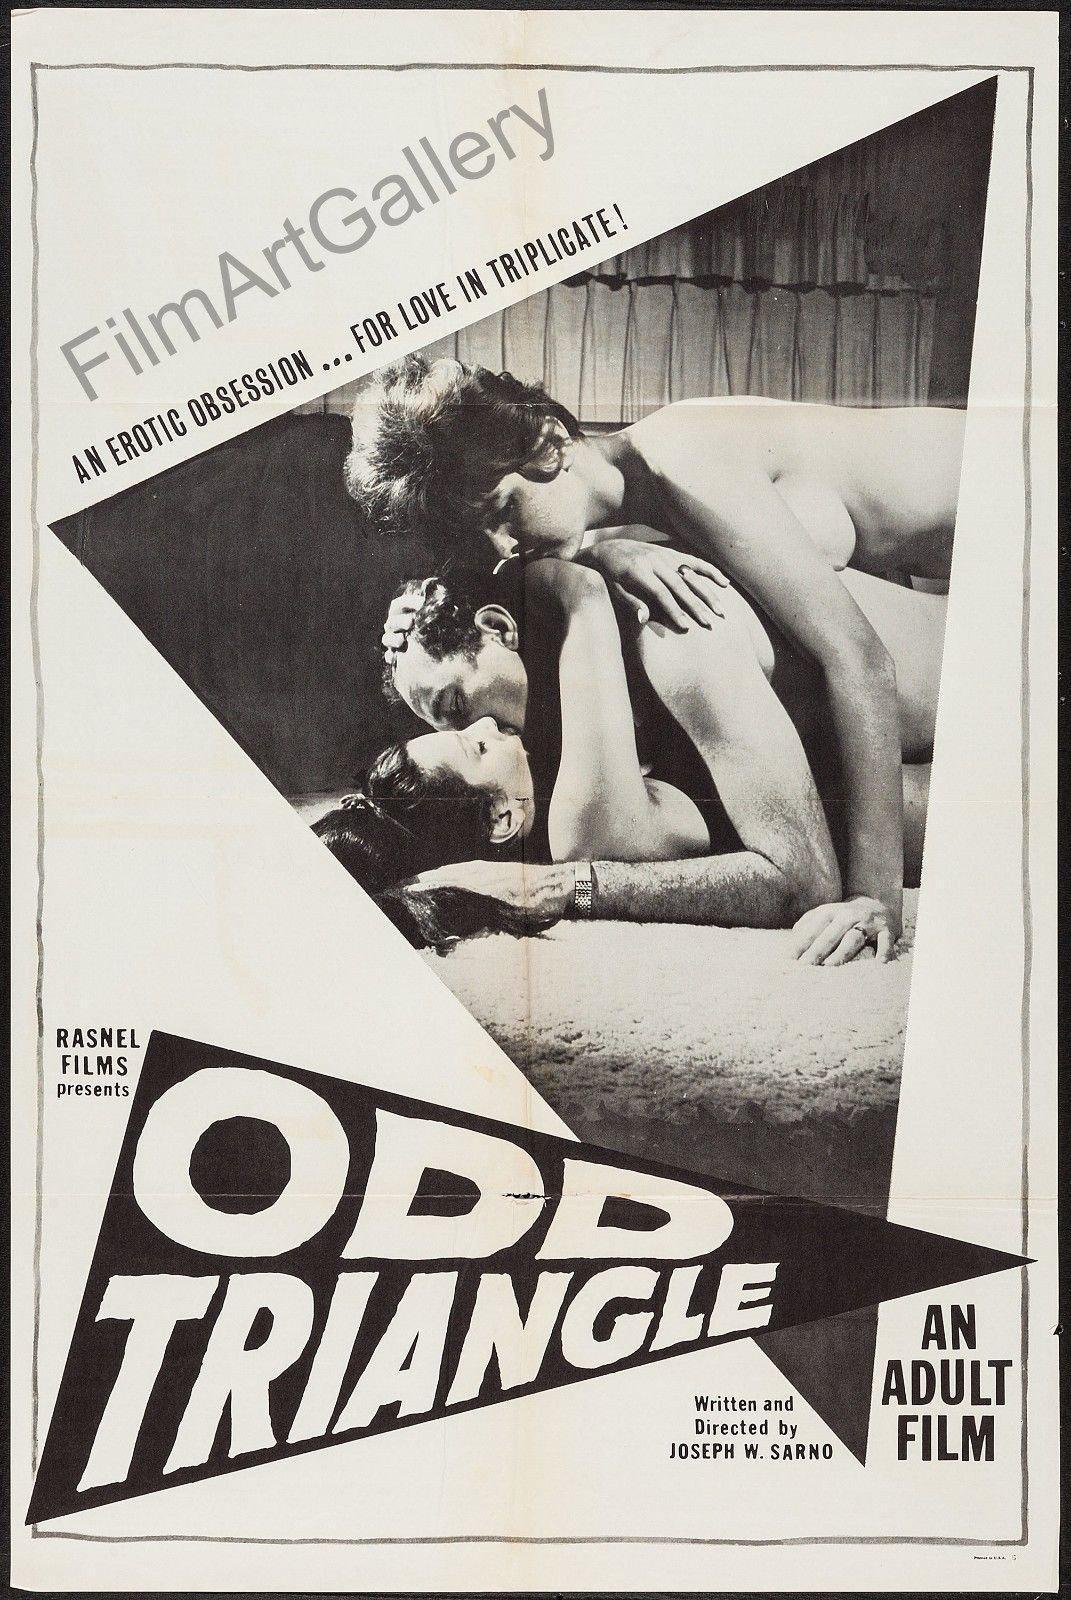 The Odd Triangle 1 Sheet (27x41) Original Vintage Movie Poster